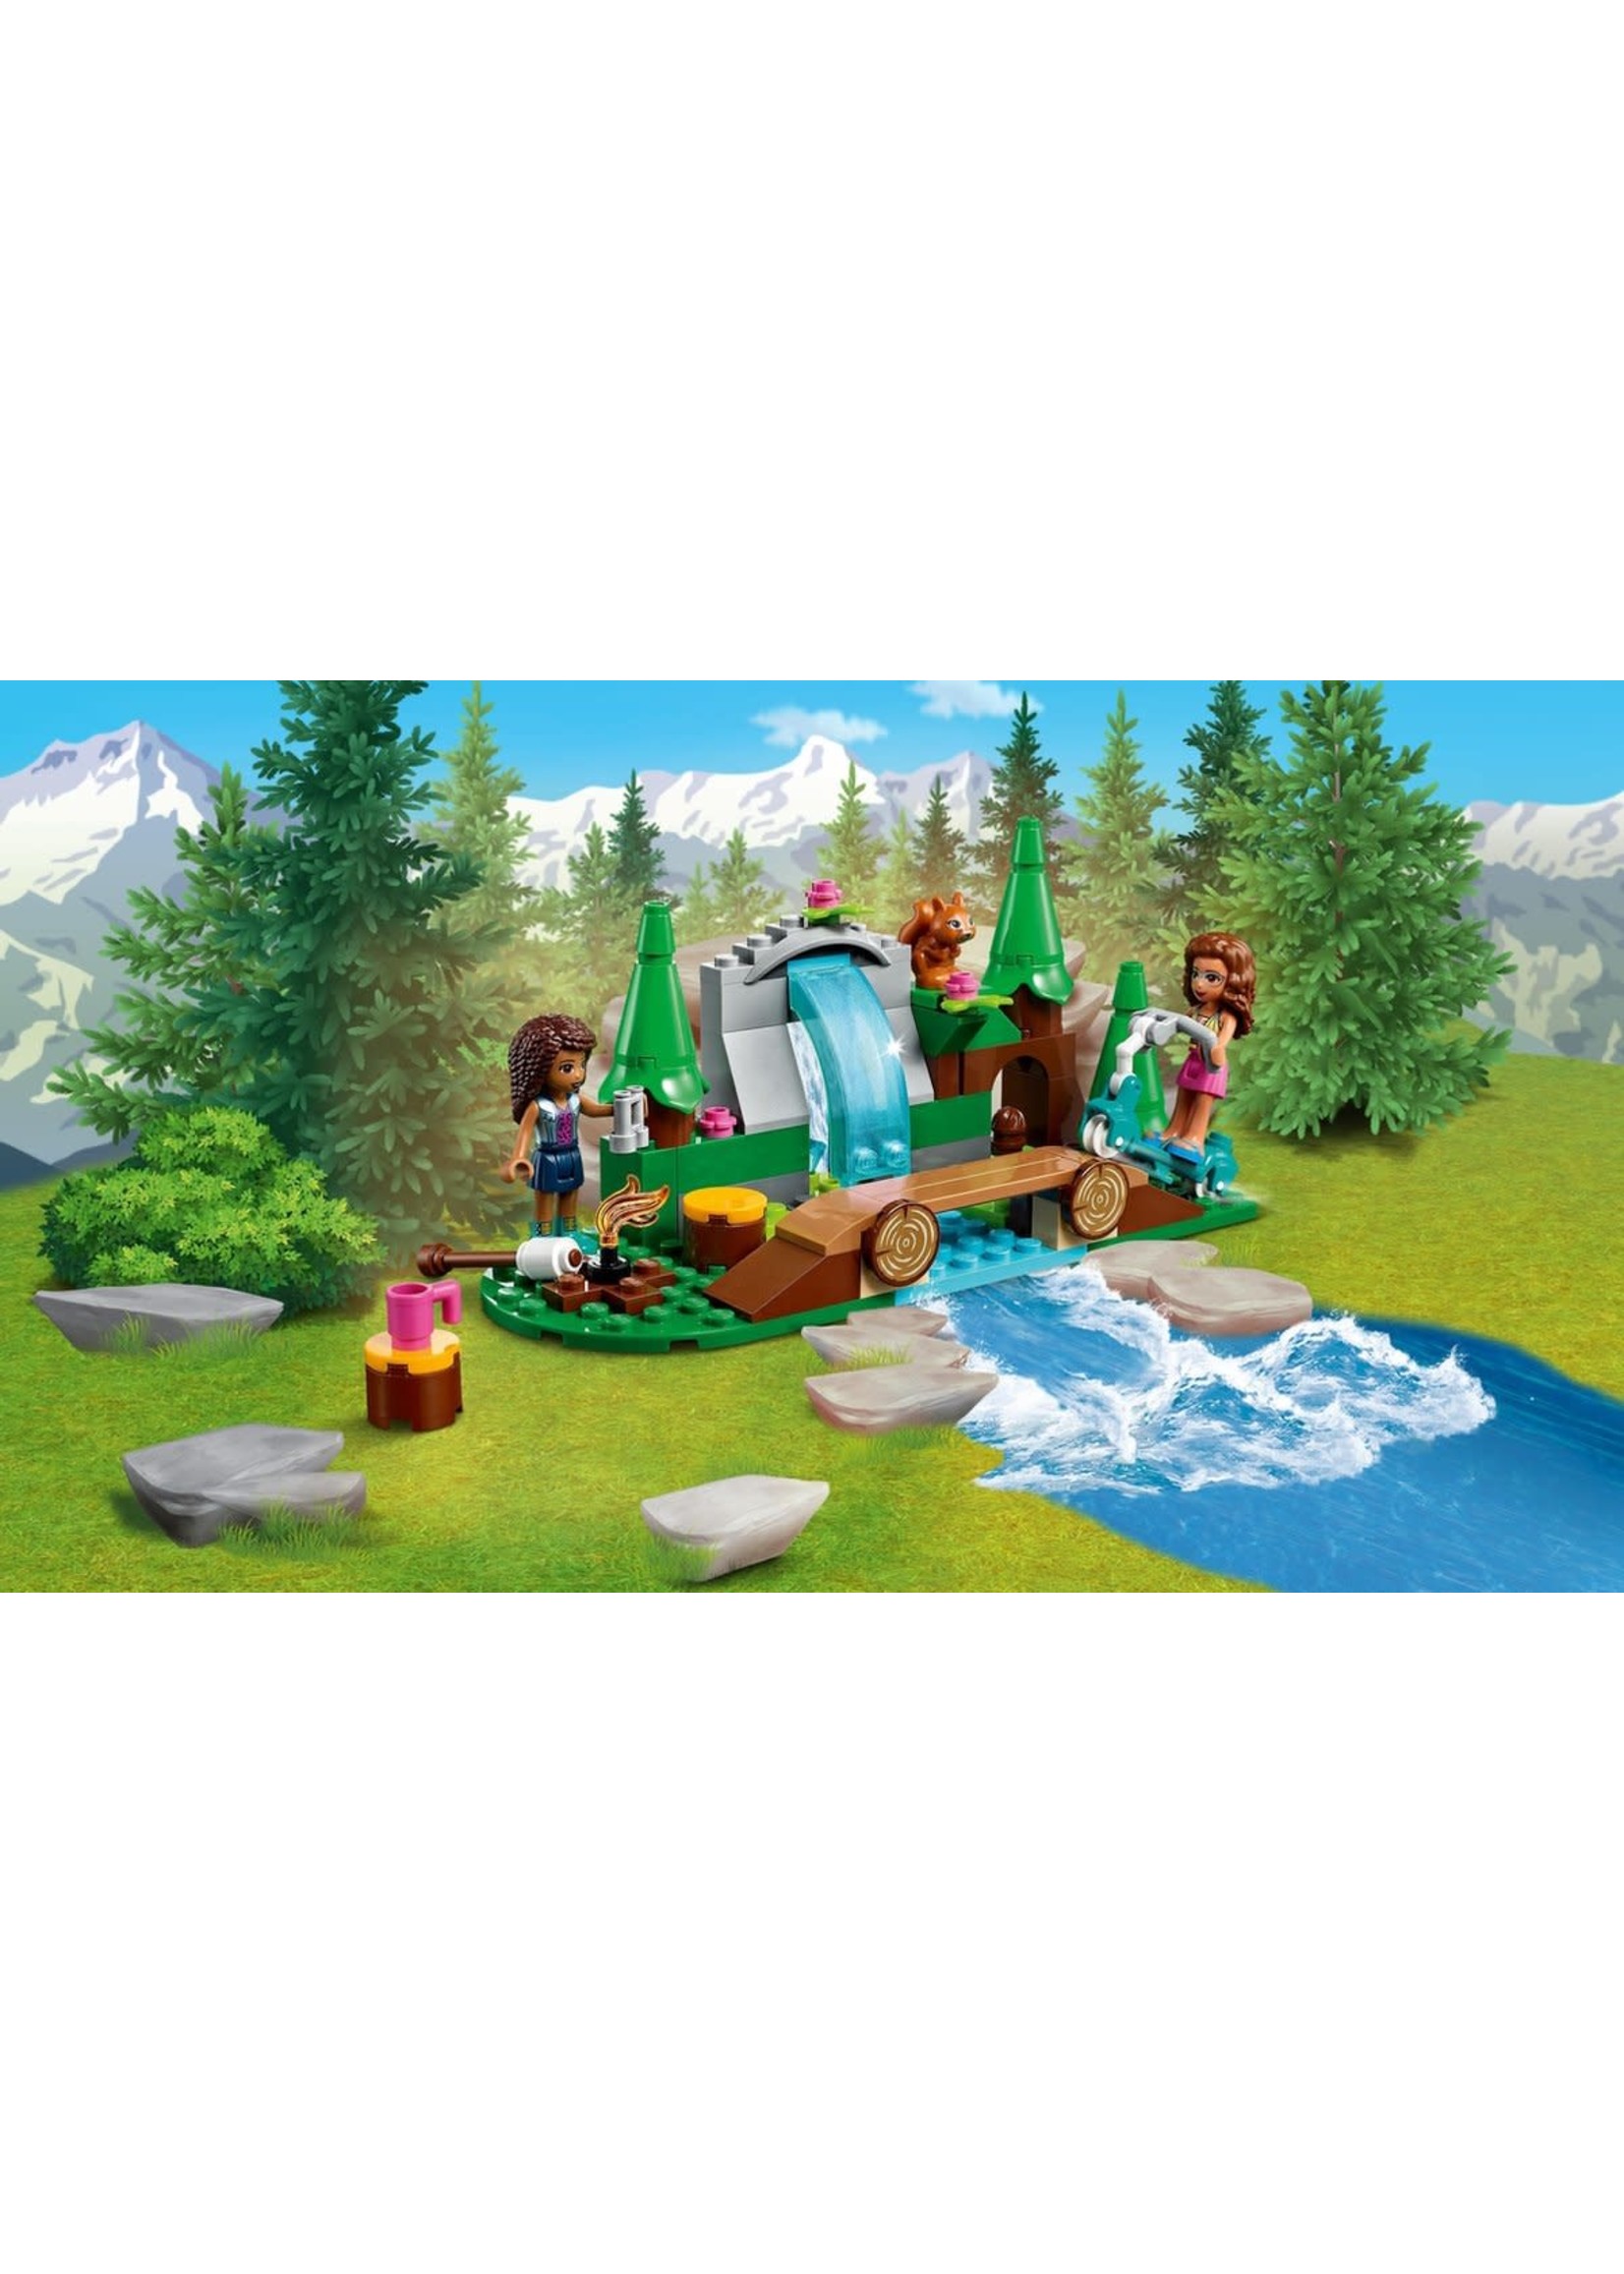 Lego Lego Friends 41677 Mia's Forest Waterfall